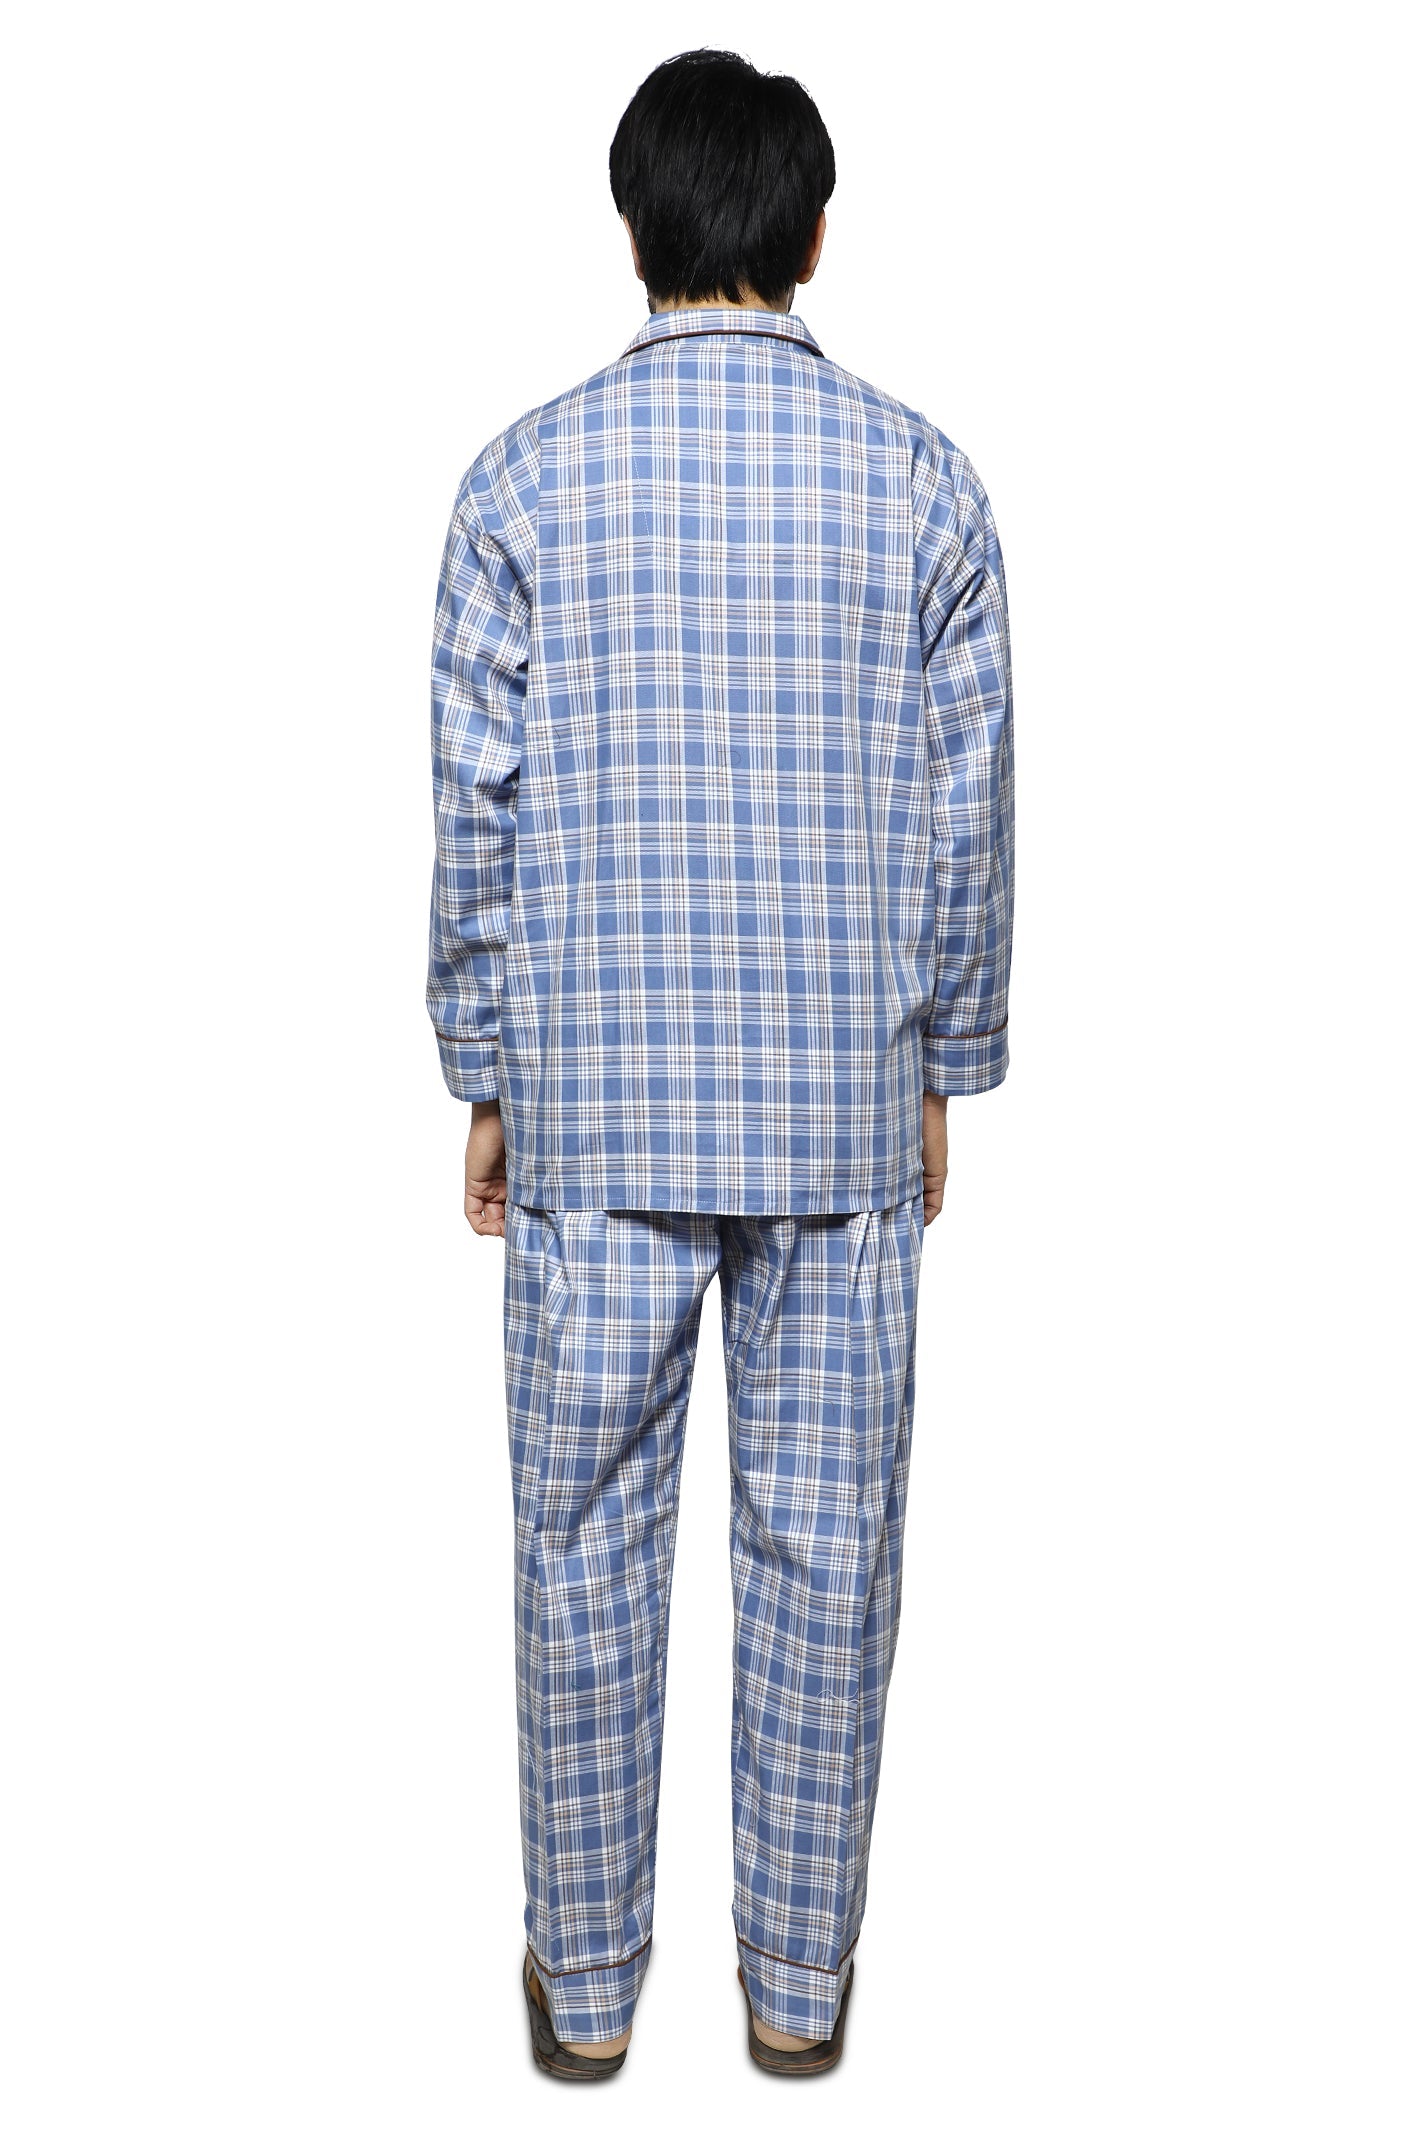 Diner's Night Suit for Men SKU: FNS021-BLUE - Diners